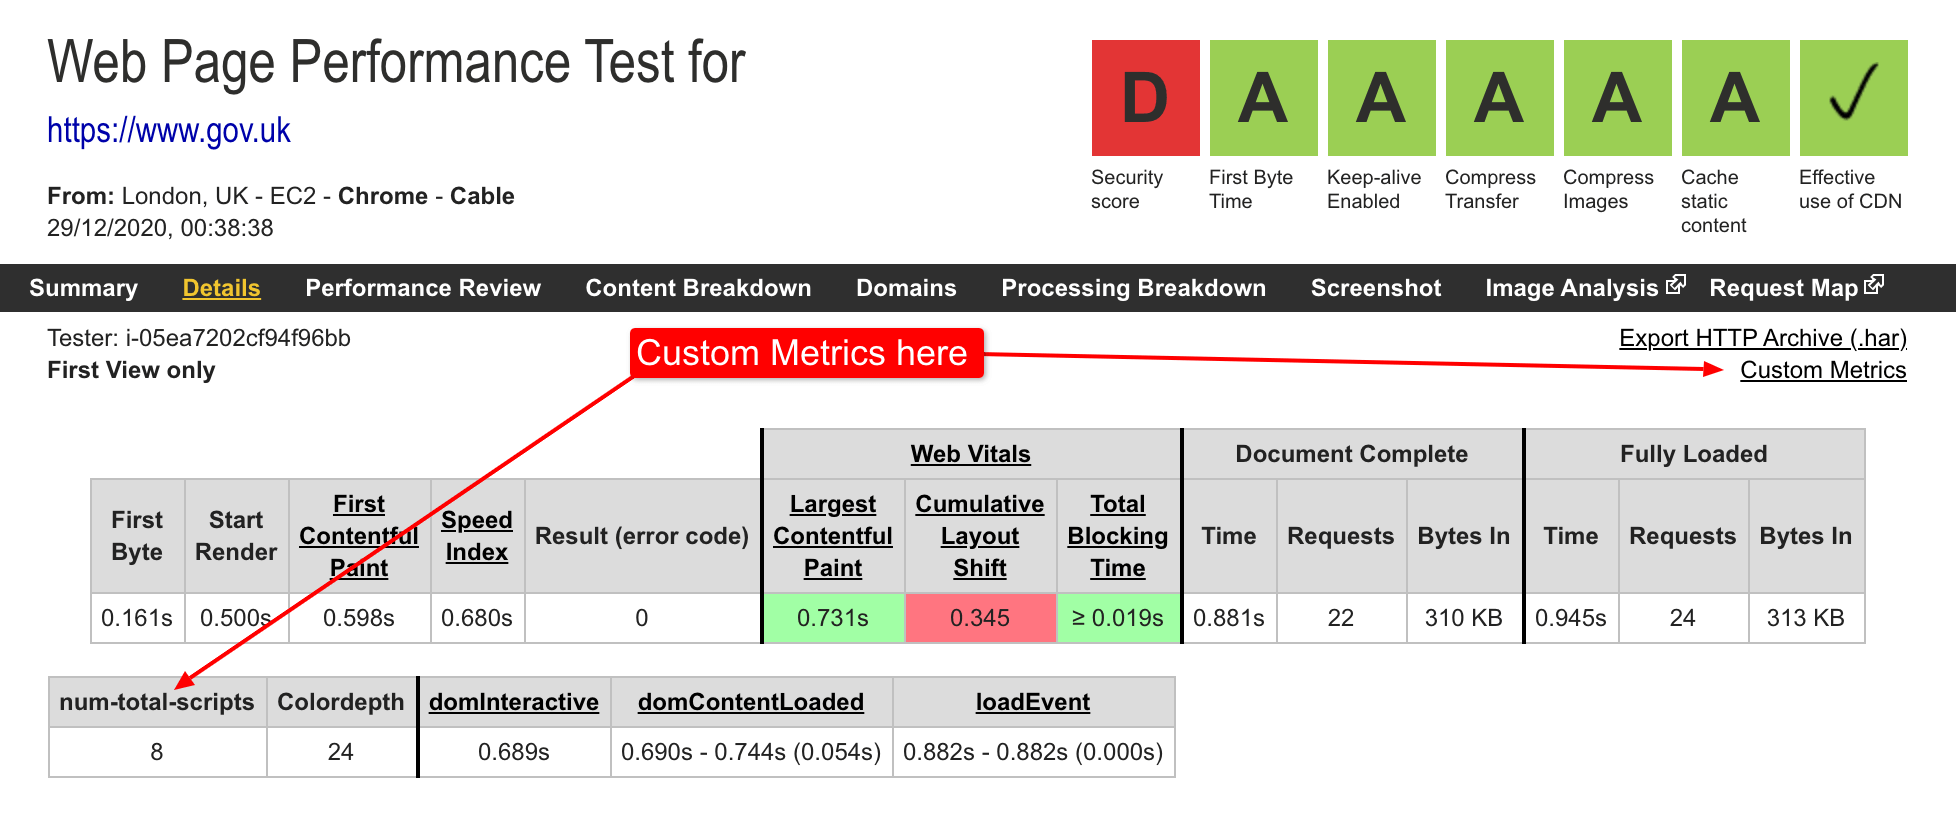 Custom metrics can be viewed inside an individual test run data.